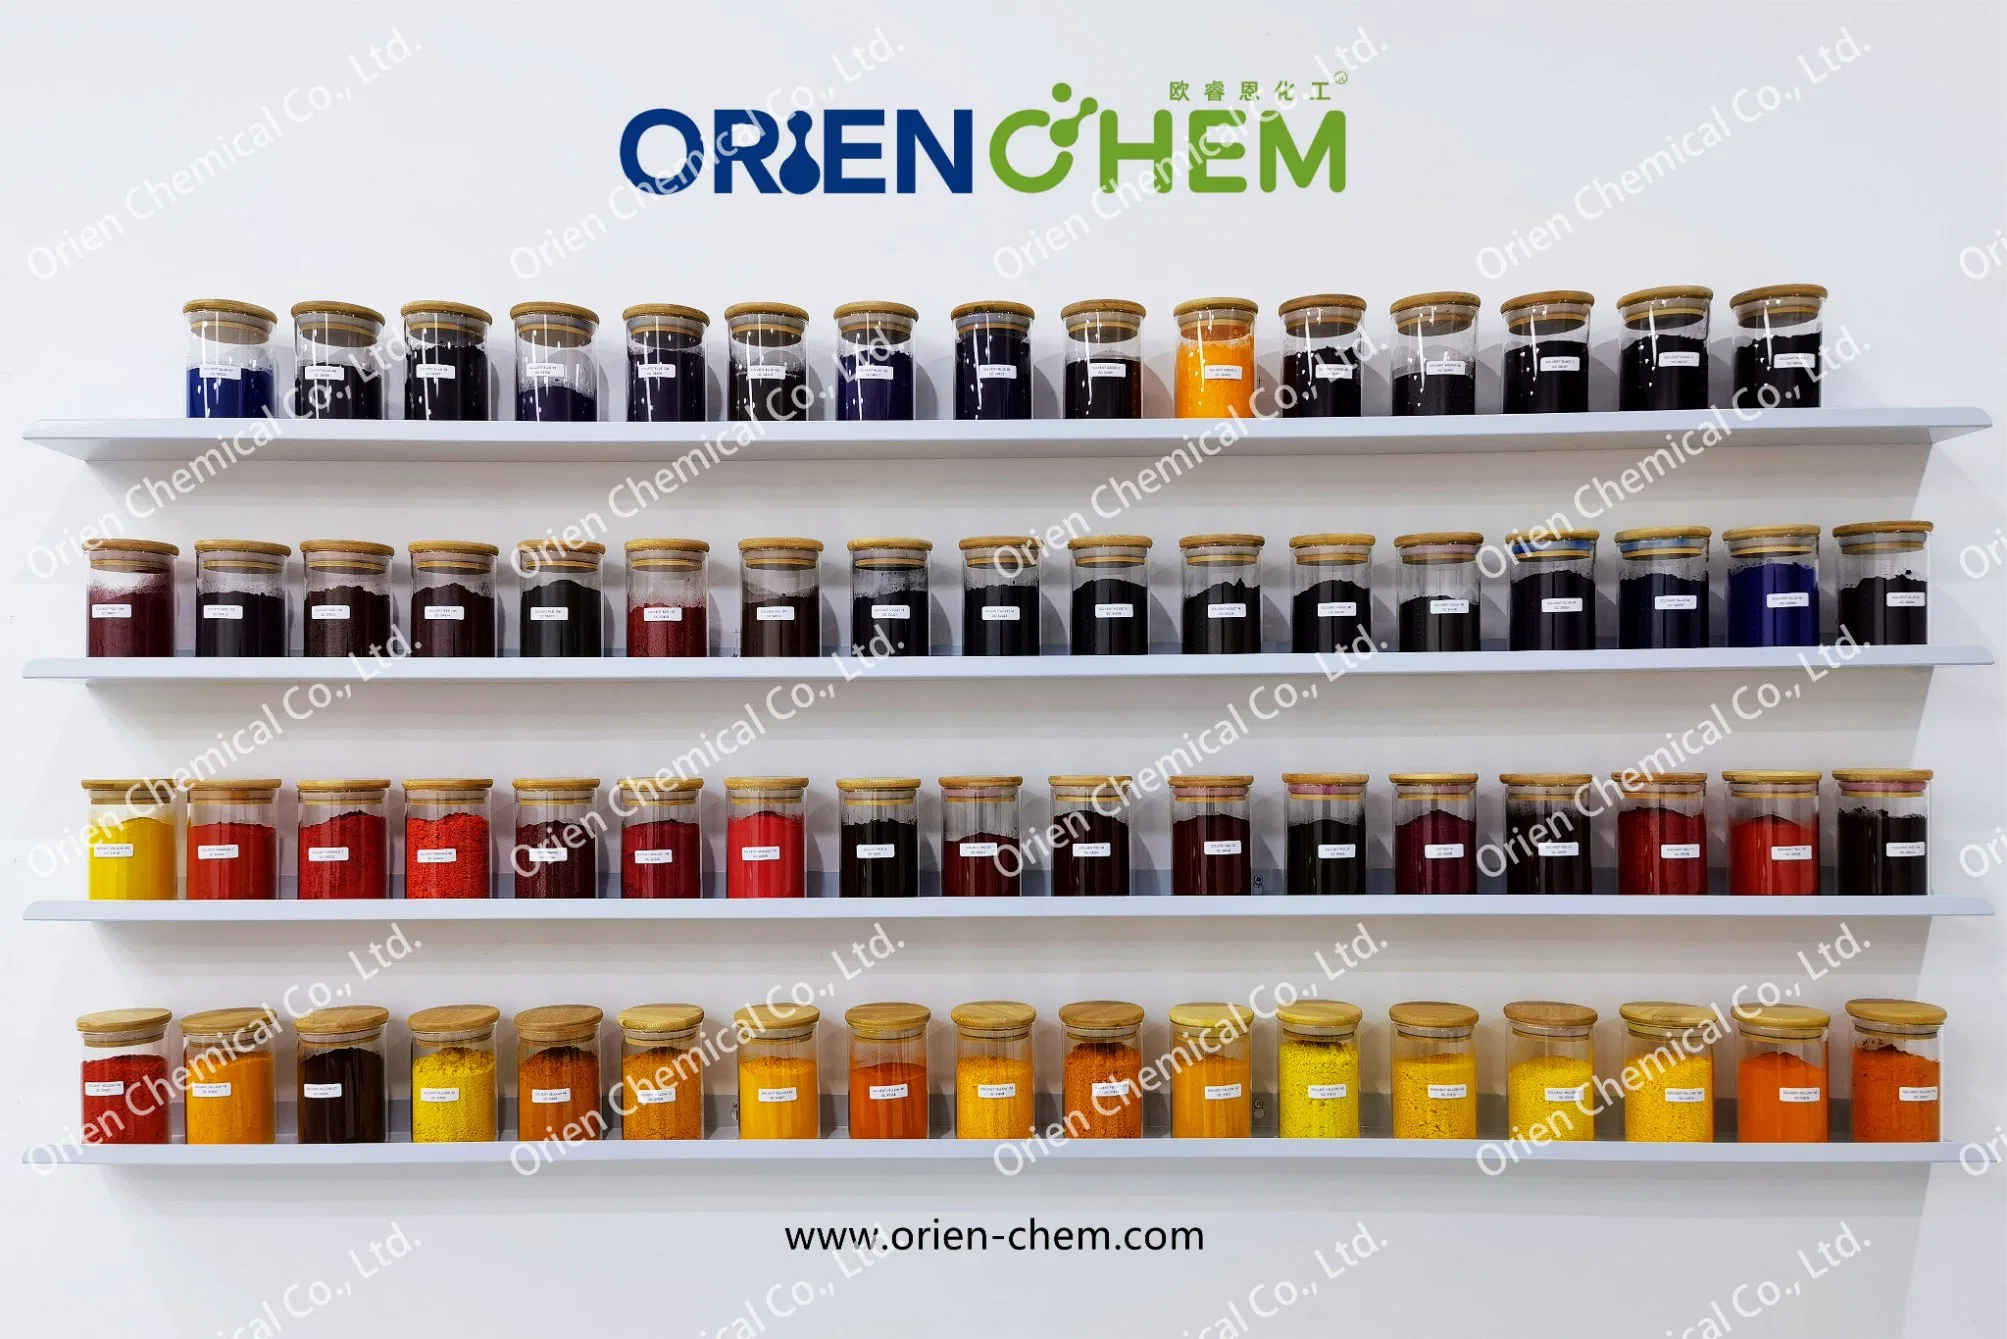 Micronized Superfine Iron Oxide Yellow 905-M 910-M 311-FM Inorganic Pigment